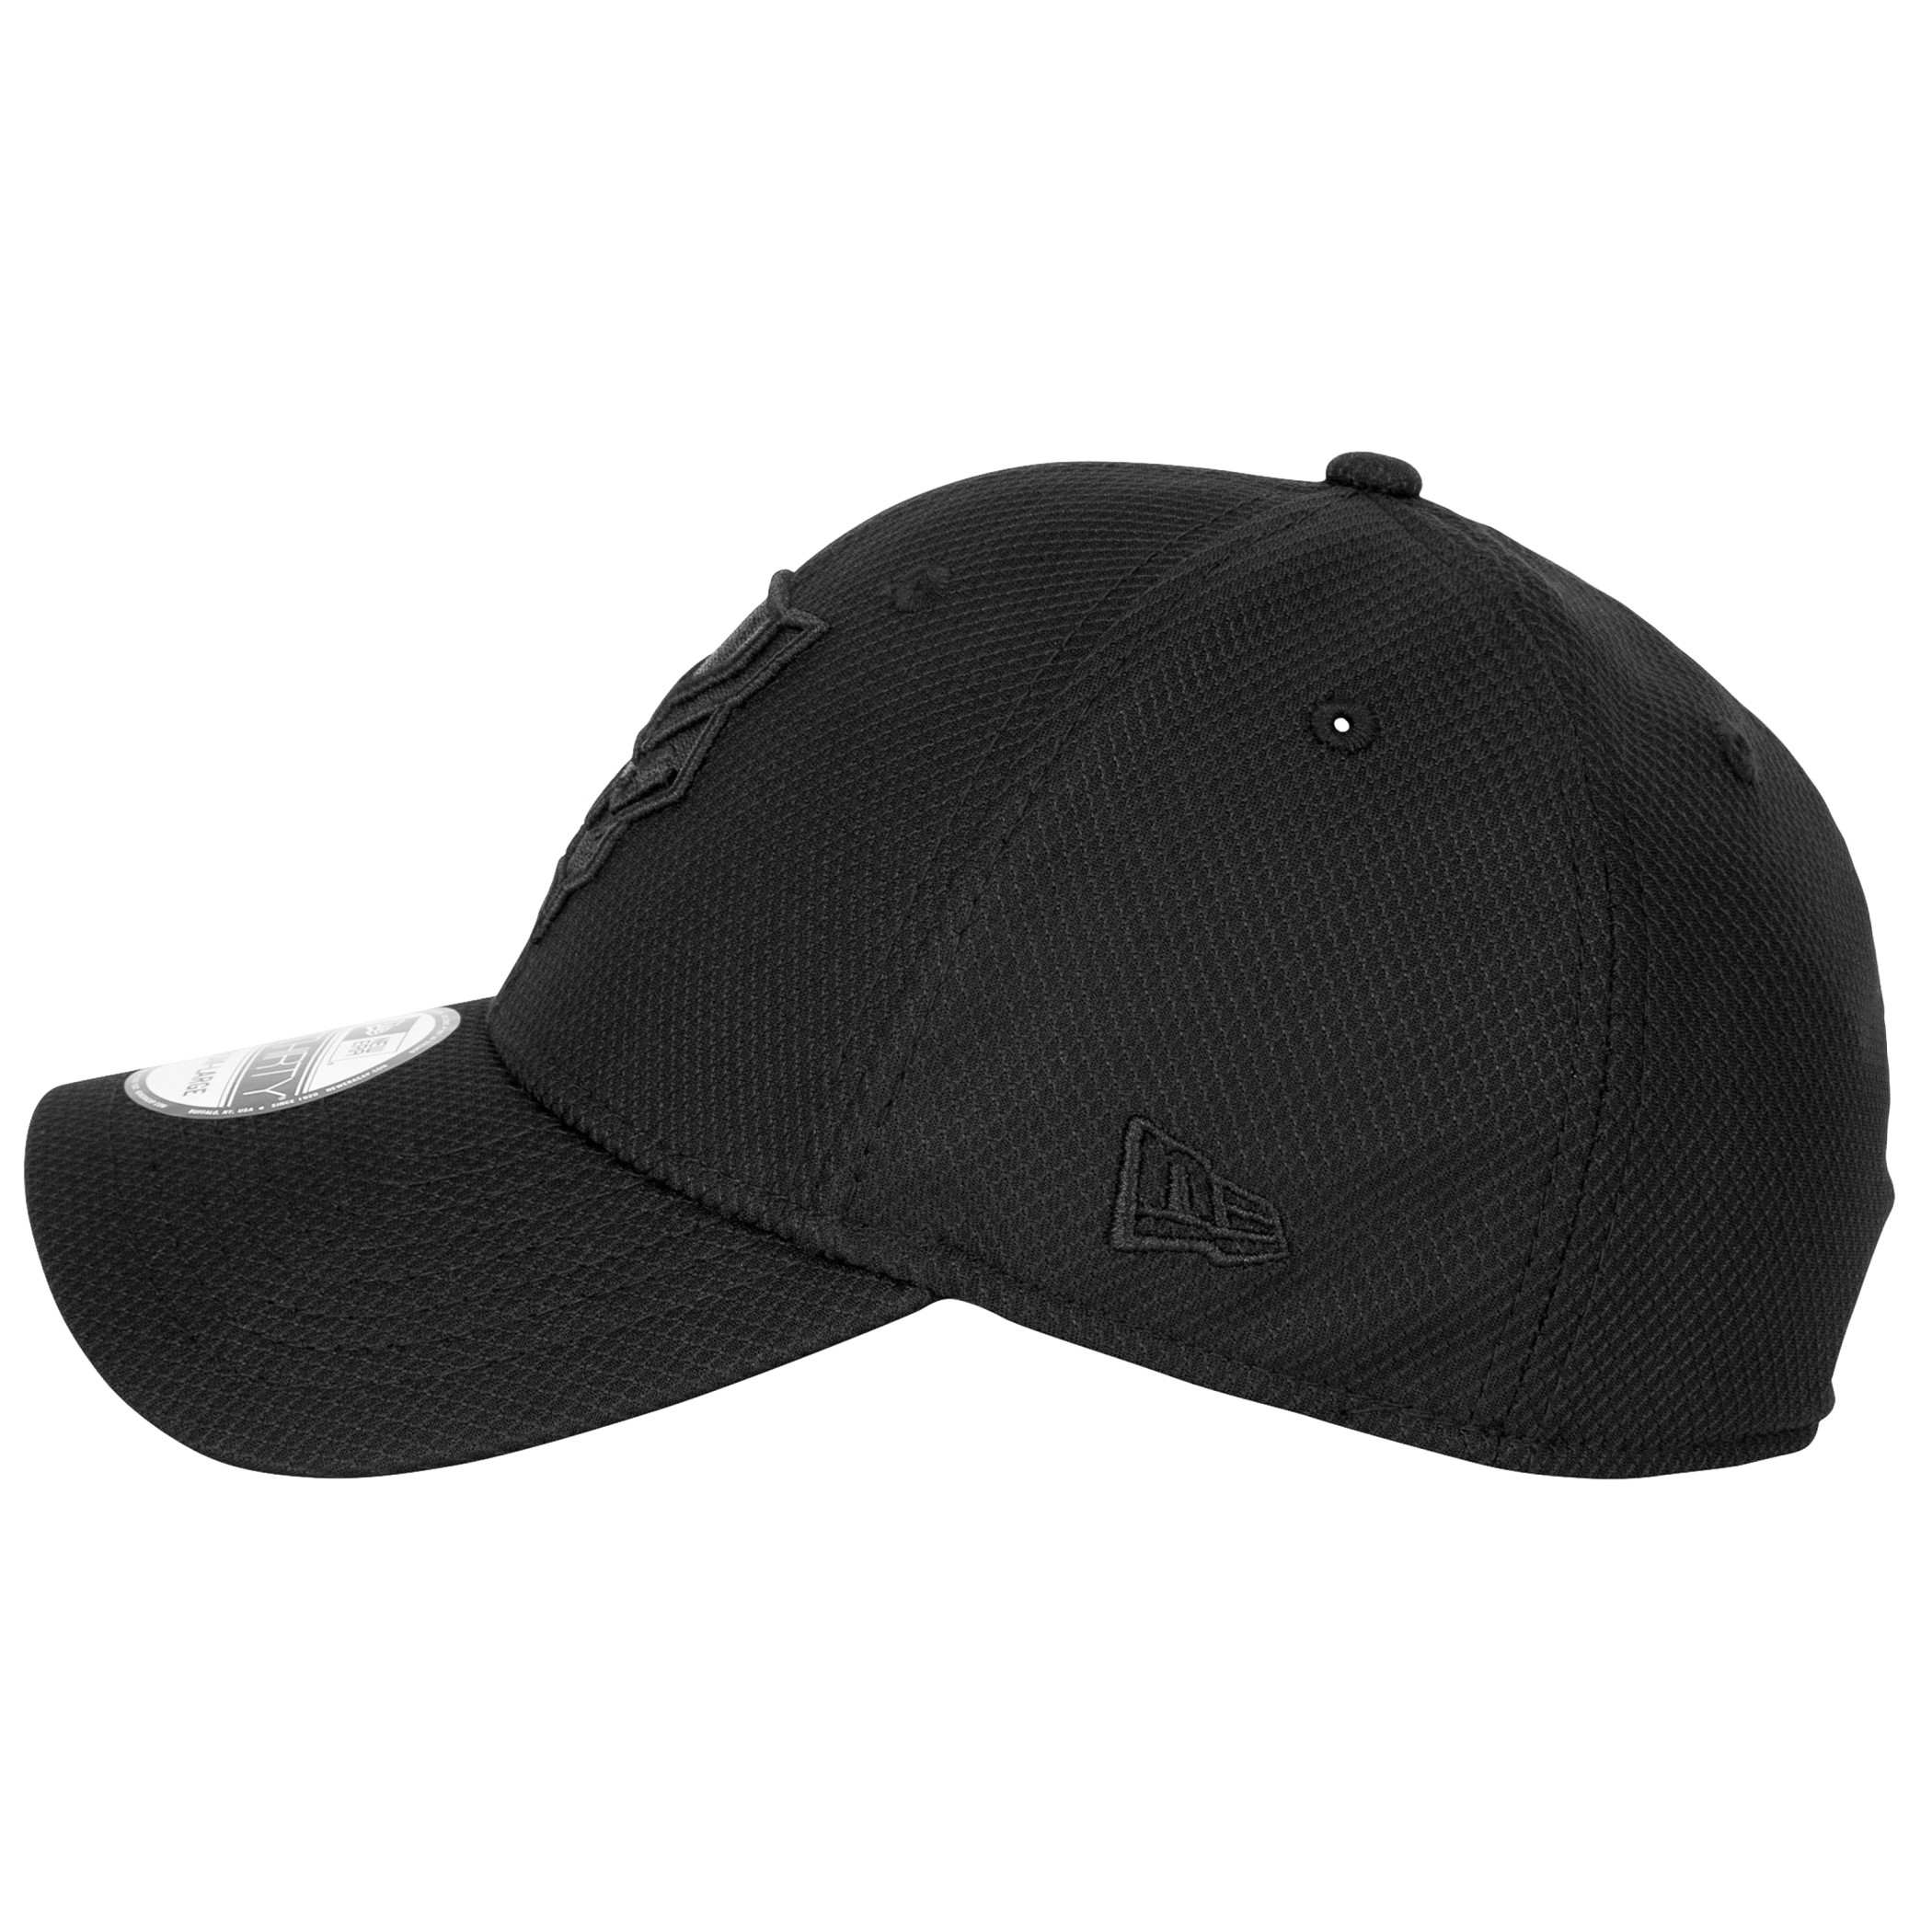 Black Panther Logo Black on Black New Era 39Thirty Fitted Hat